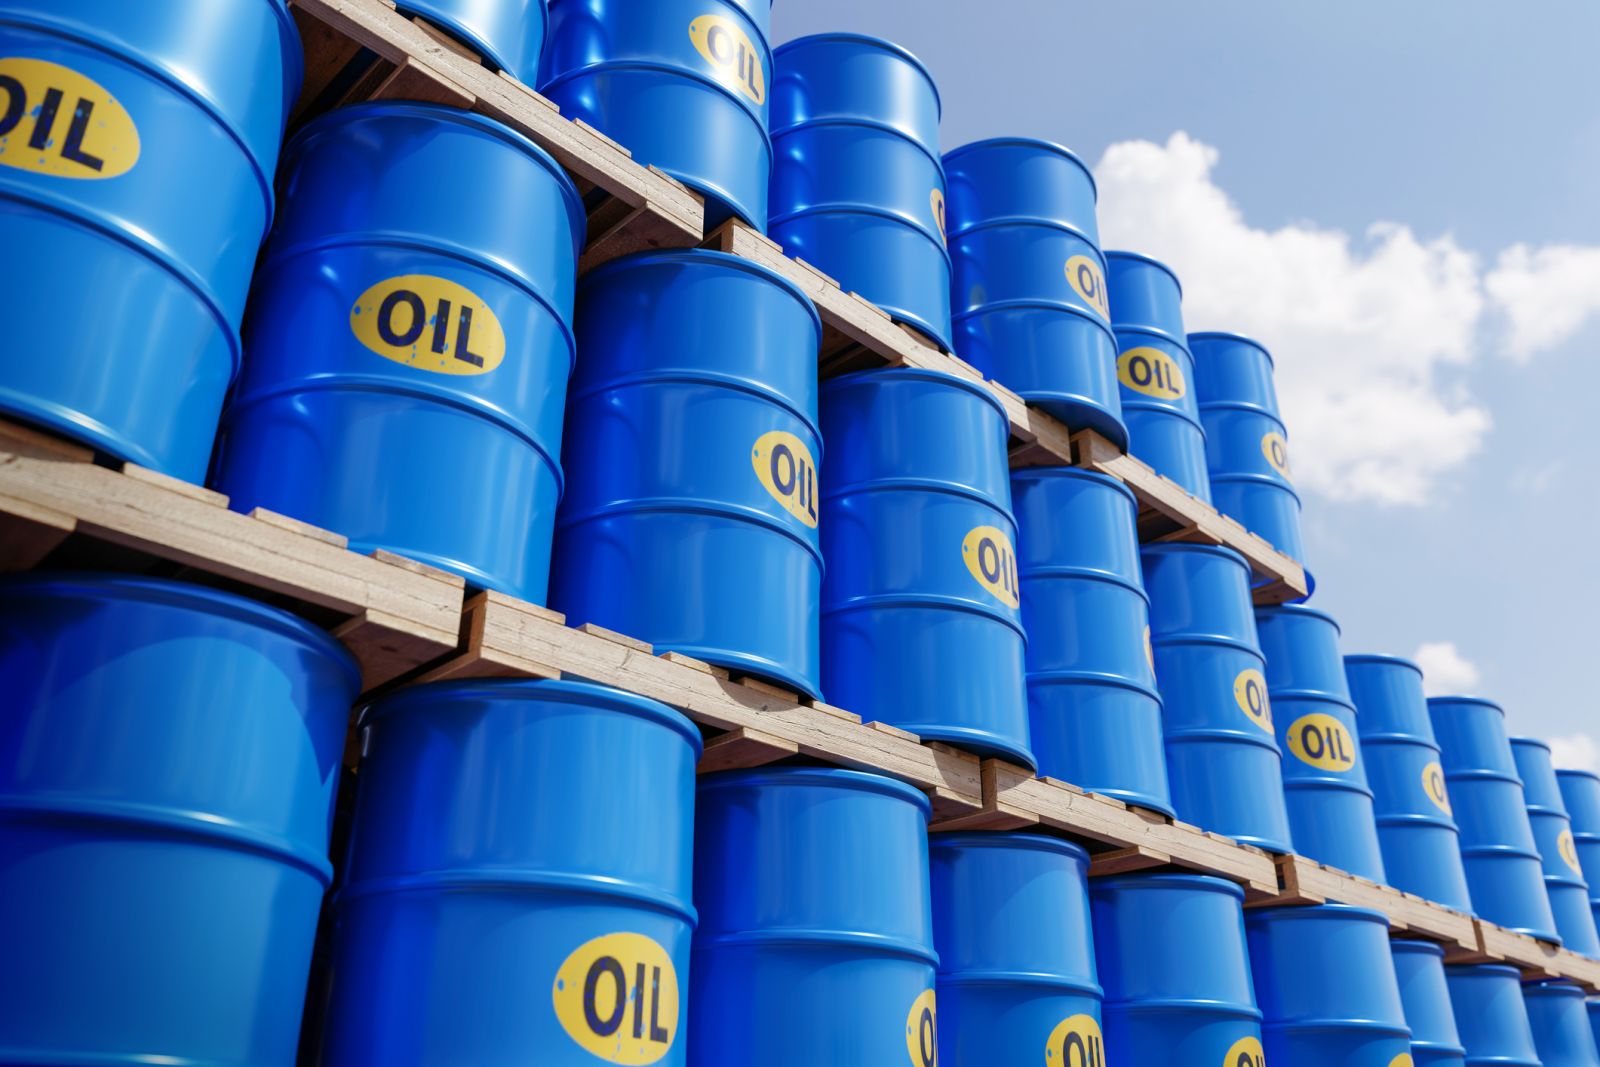 Oil - Stacked oil barrels by JONGHO SHIN via iStock